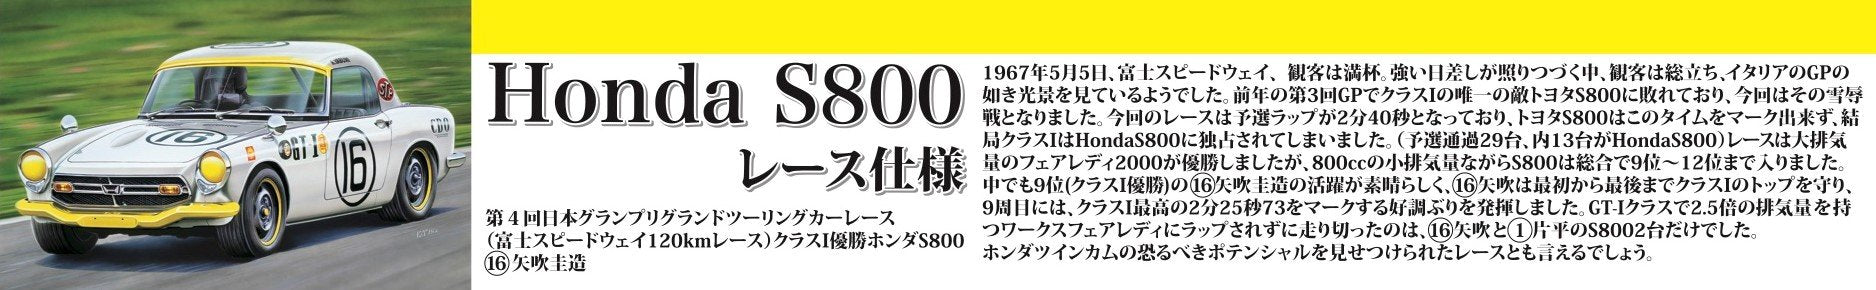 FUJIMI Id-253 Honda S800 Rennversion Bausatz im Maßstab 1/24